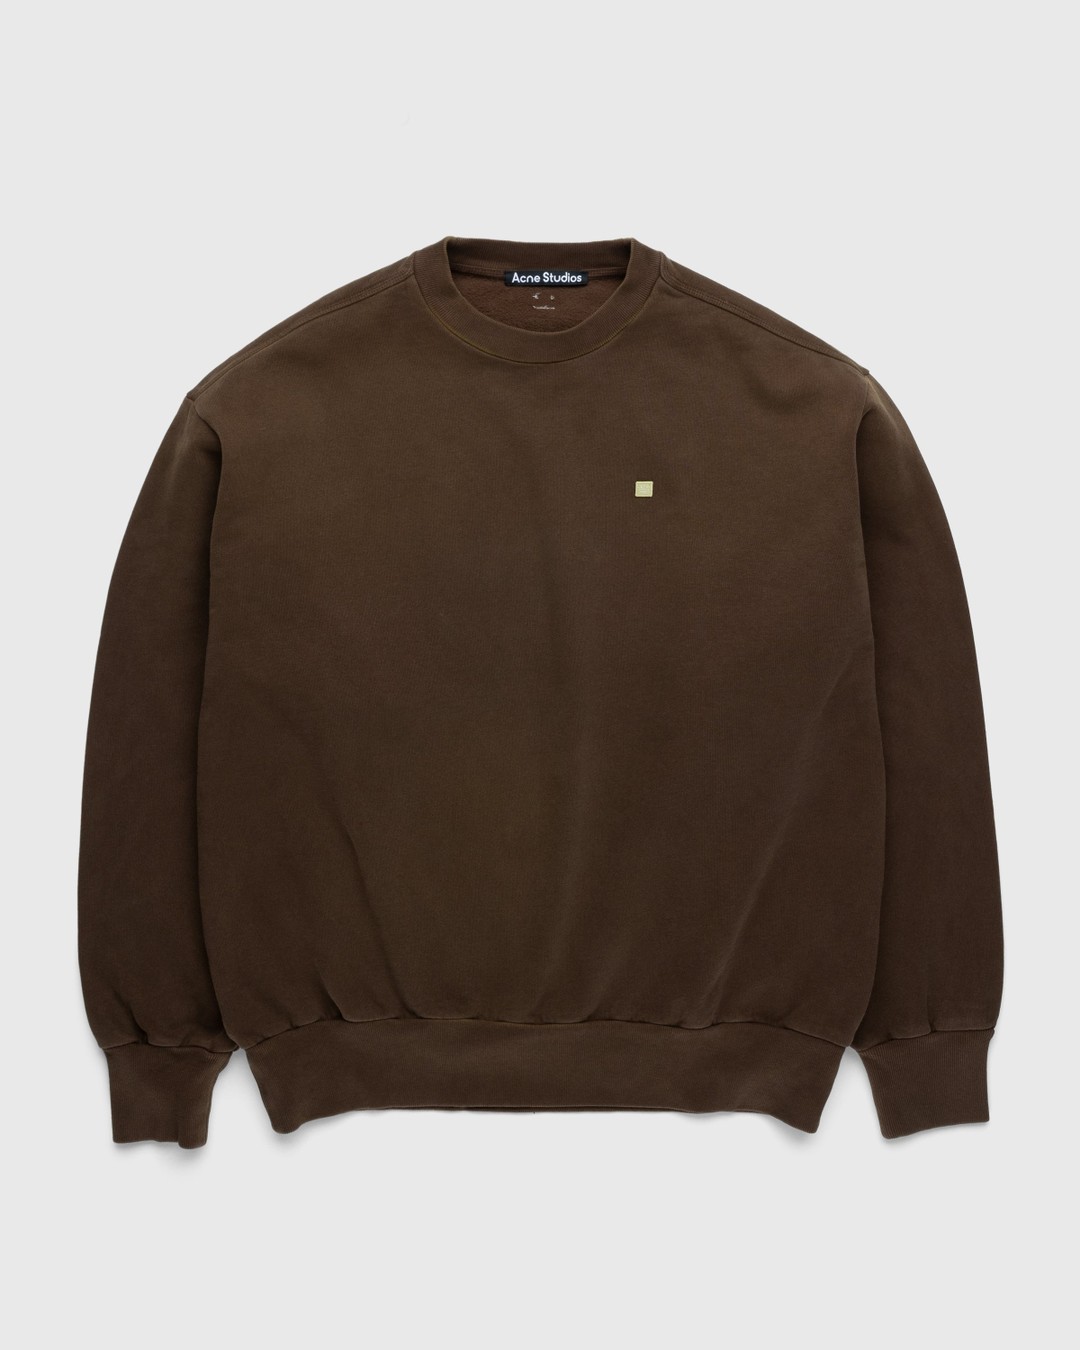 Acne Studios – Organic Cotton Crewneck Sweatshirt Coffee Brown - Sweatshirts - Brown - Image 1